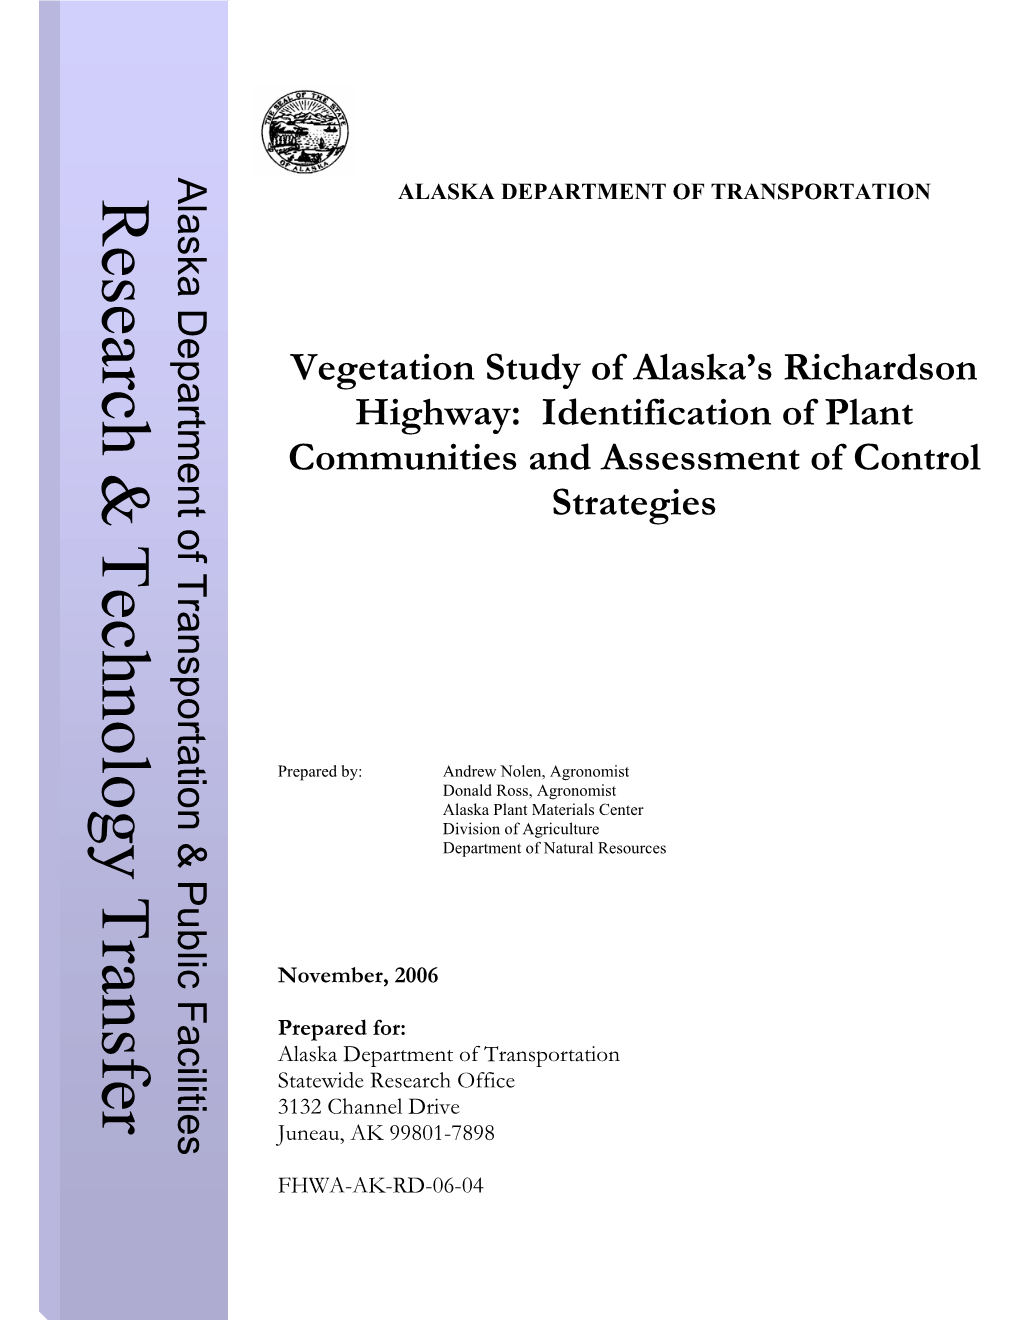 Vegetation Study of Alaska's Richardson Highway